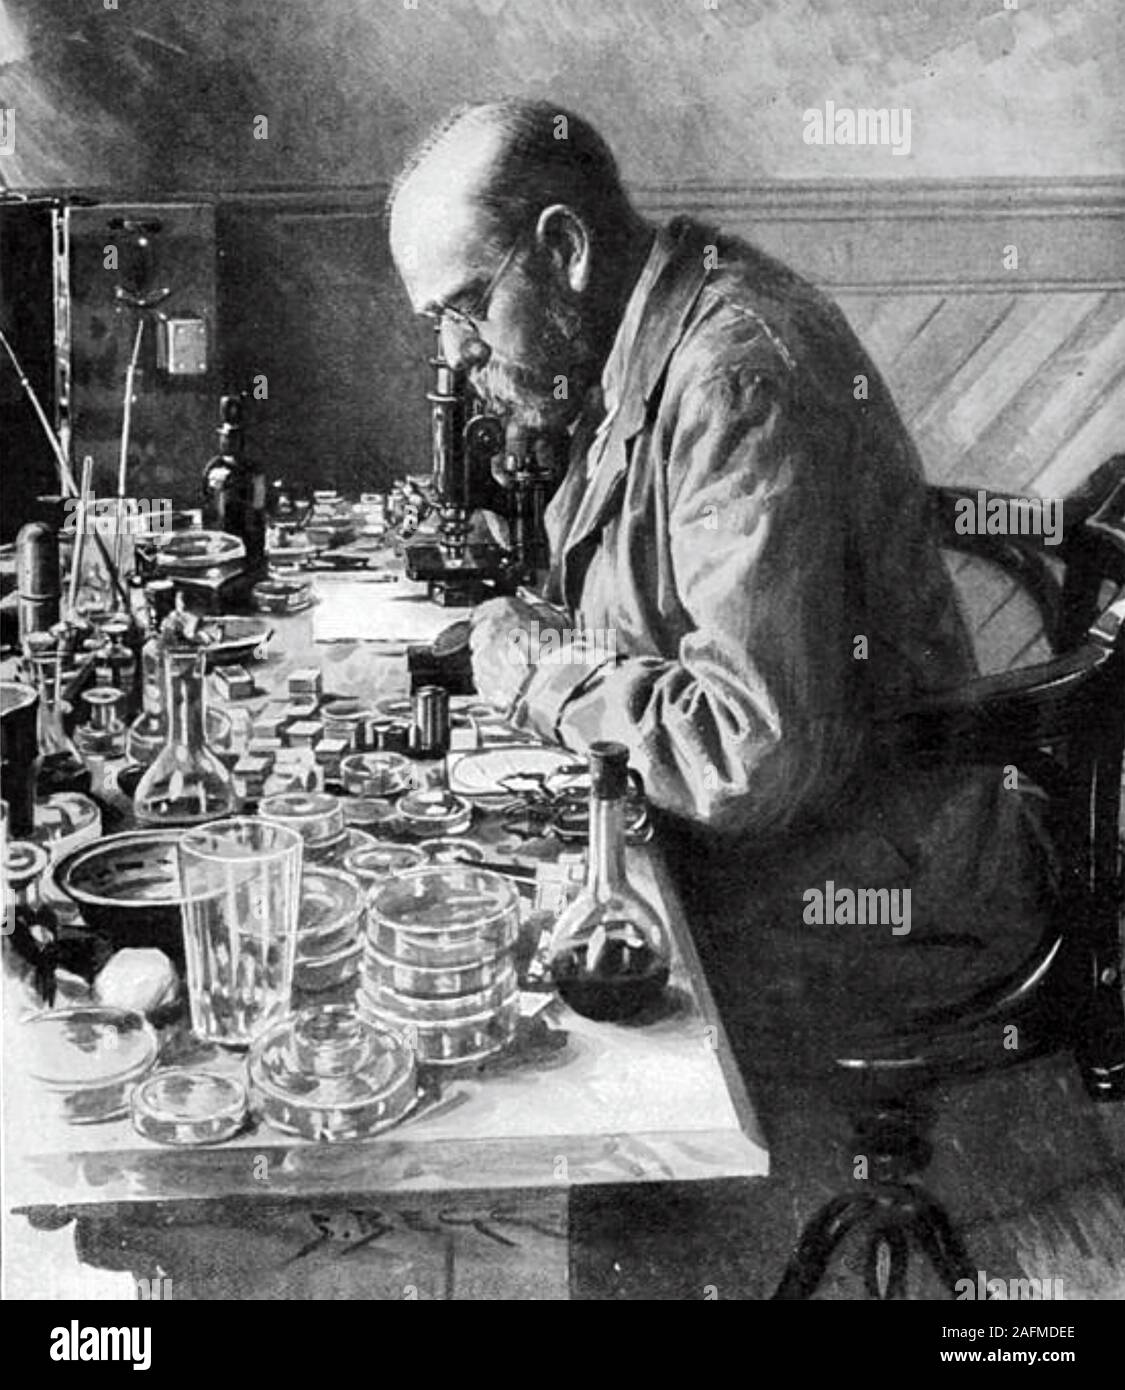 ROBERT KOCH (1843-1910) German physician and microbiologist Stock Photo